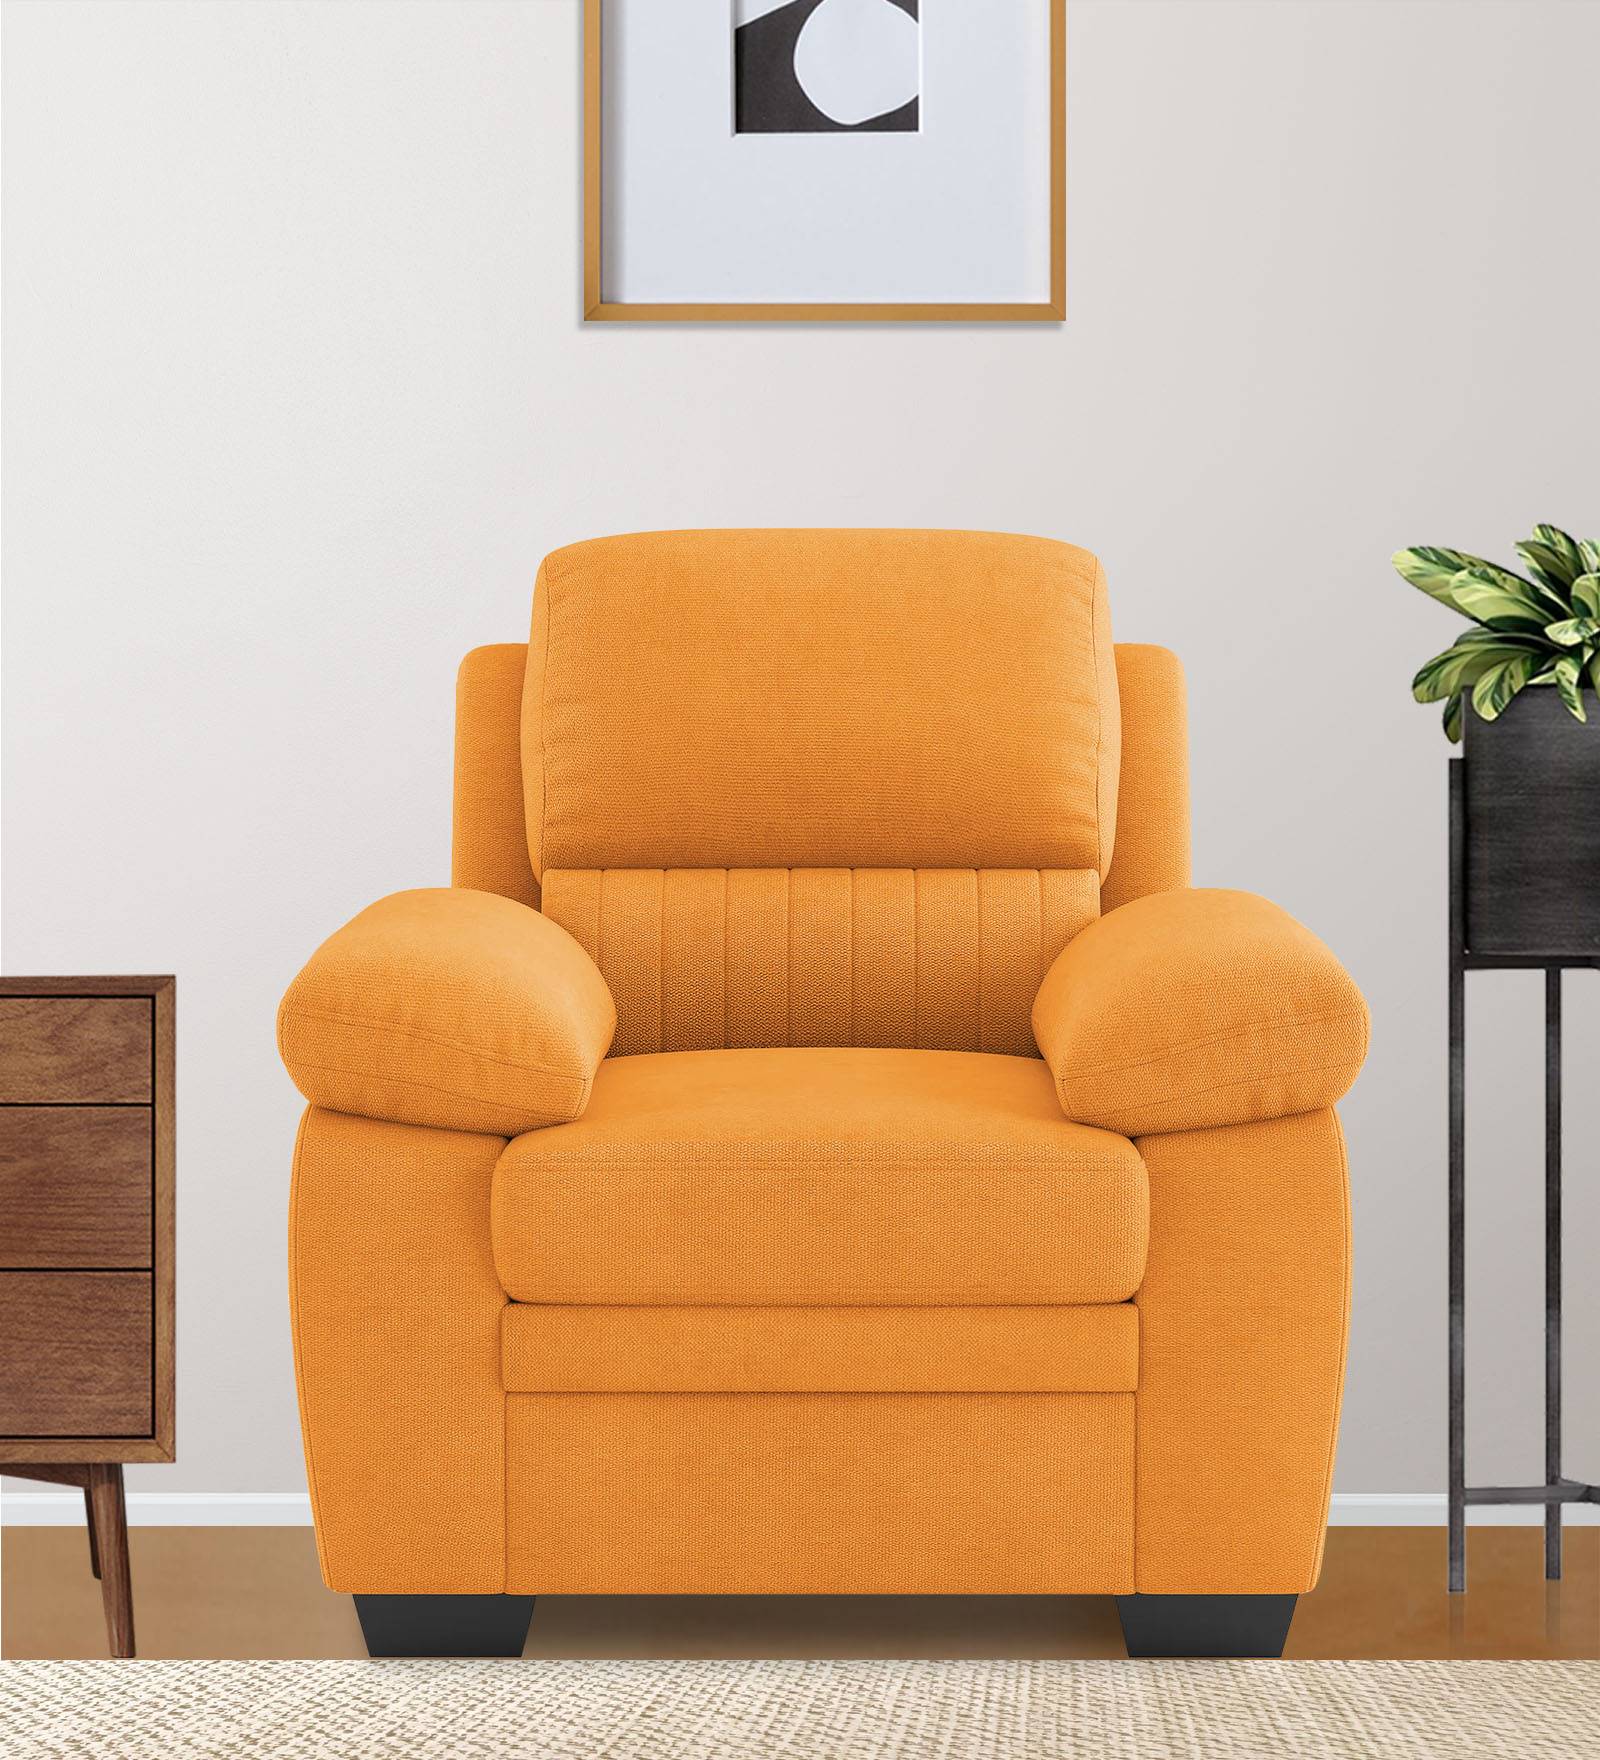 Miranda Velvet 1 Seater Sofa in Tangerine orange Colour